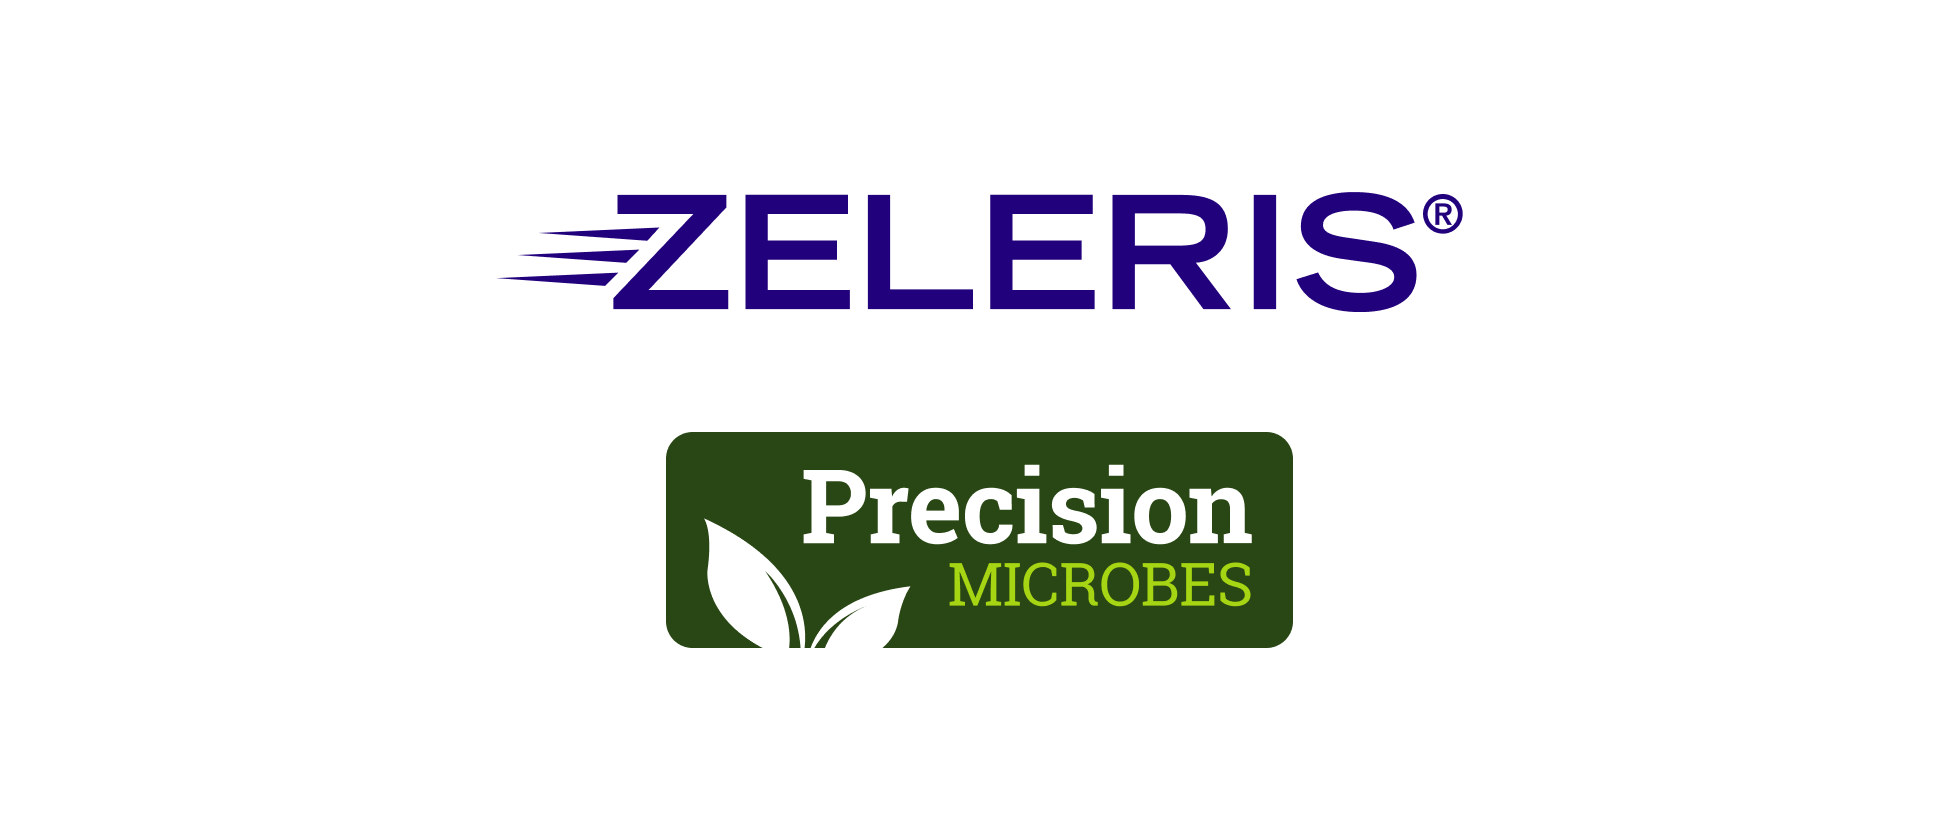 Zeleris & Precision Microbes logos